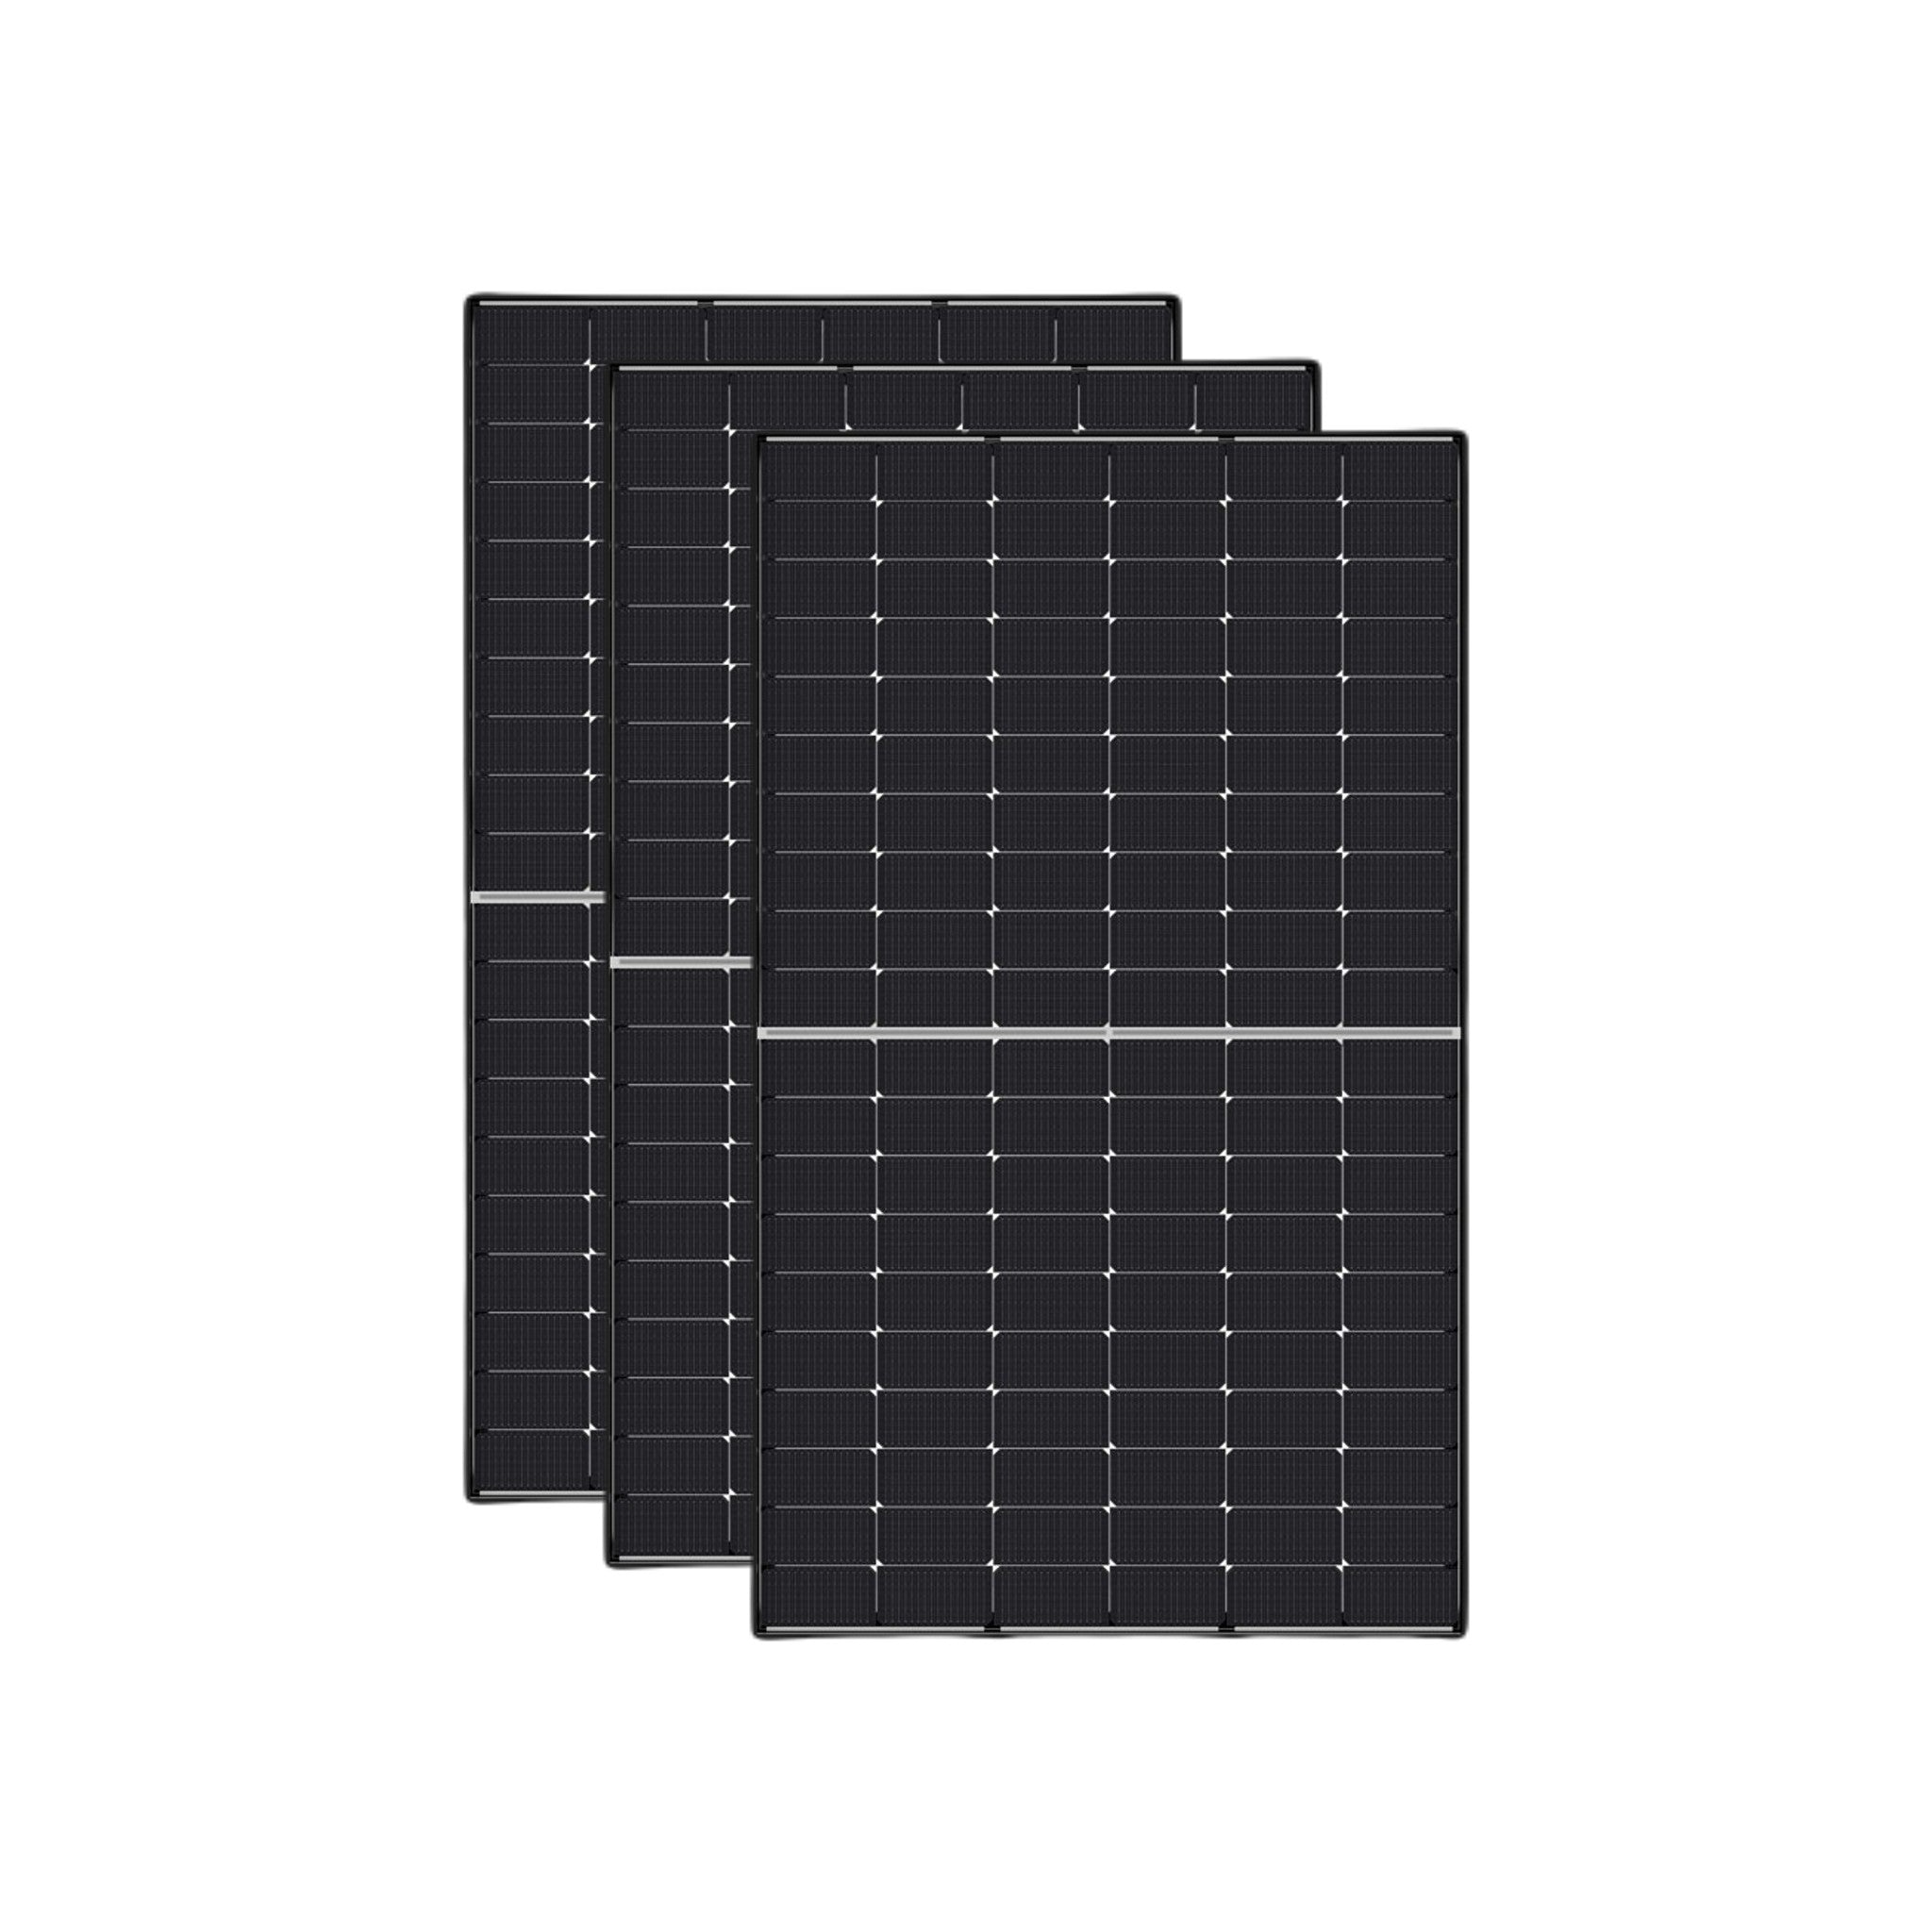 Jinko 475W Solar Panel